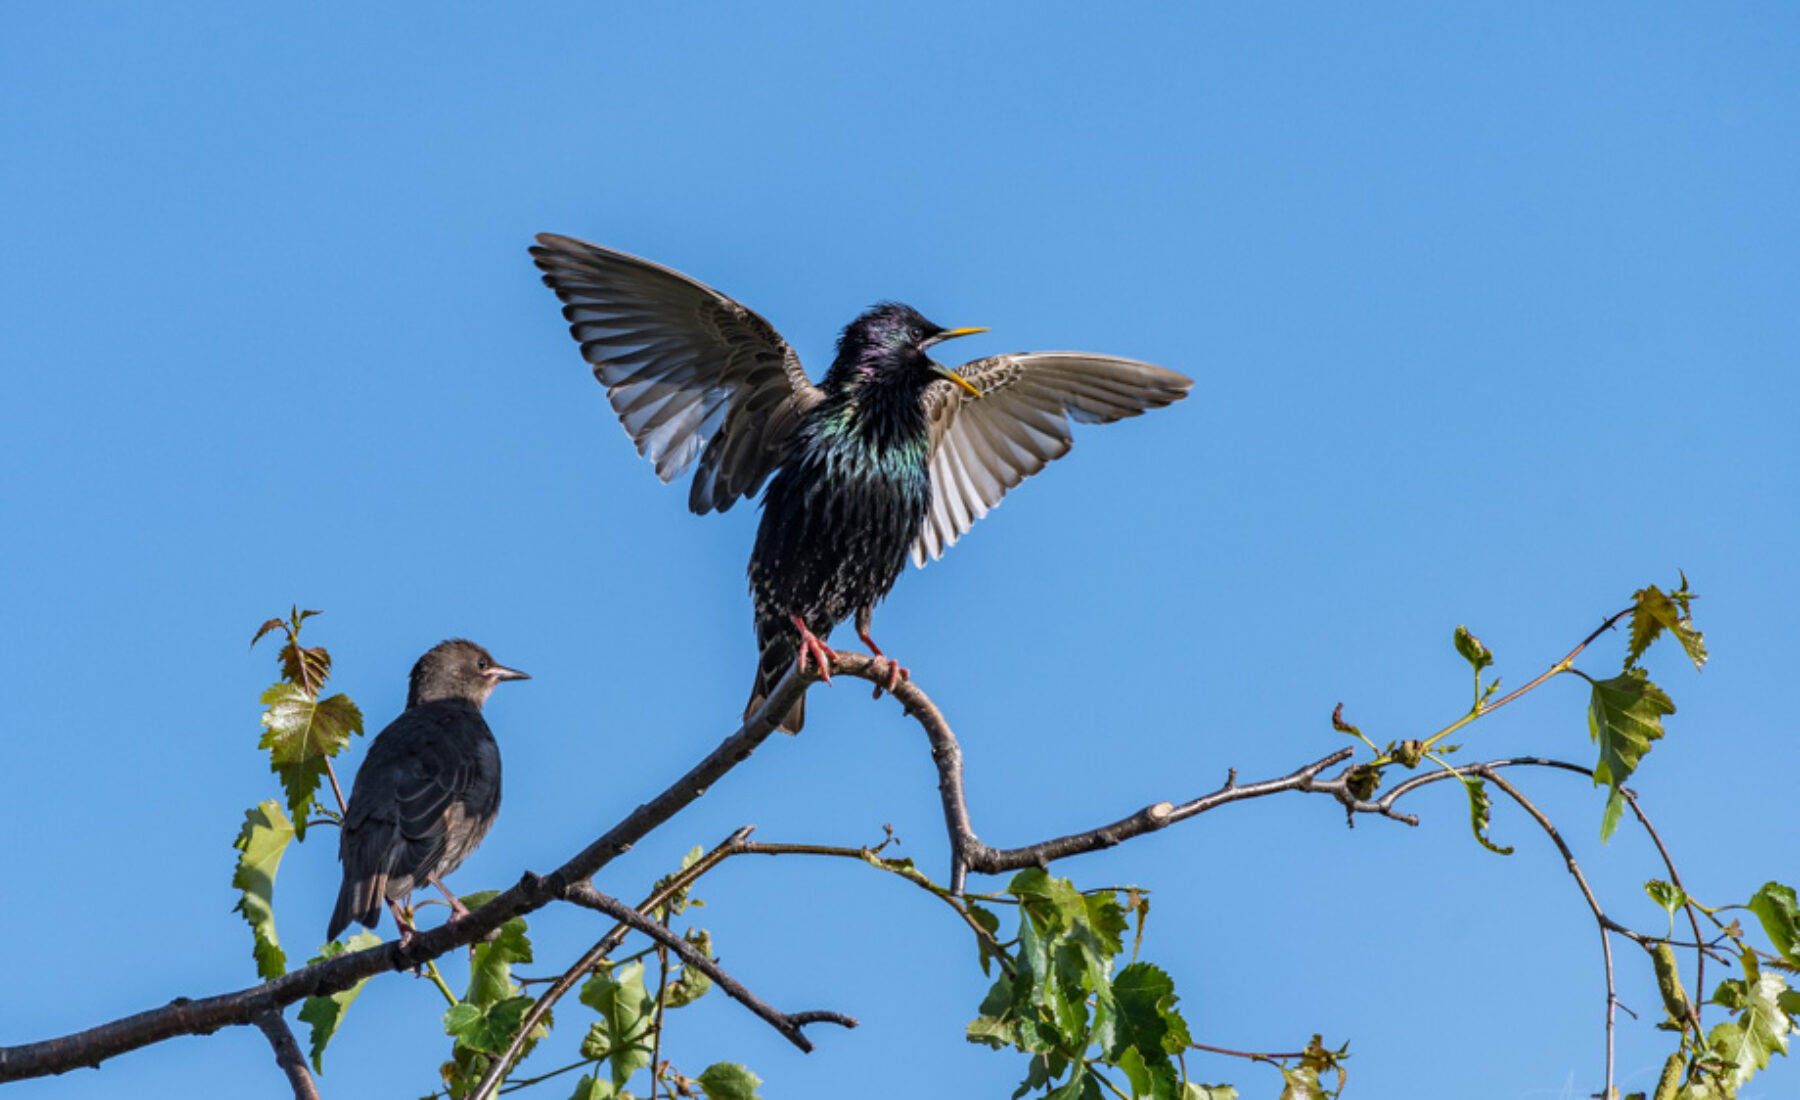 2018-05-24 Starlings